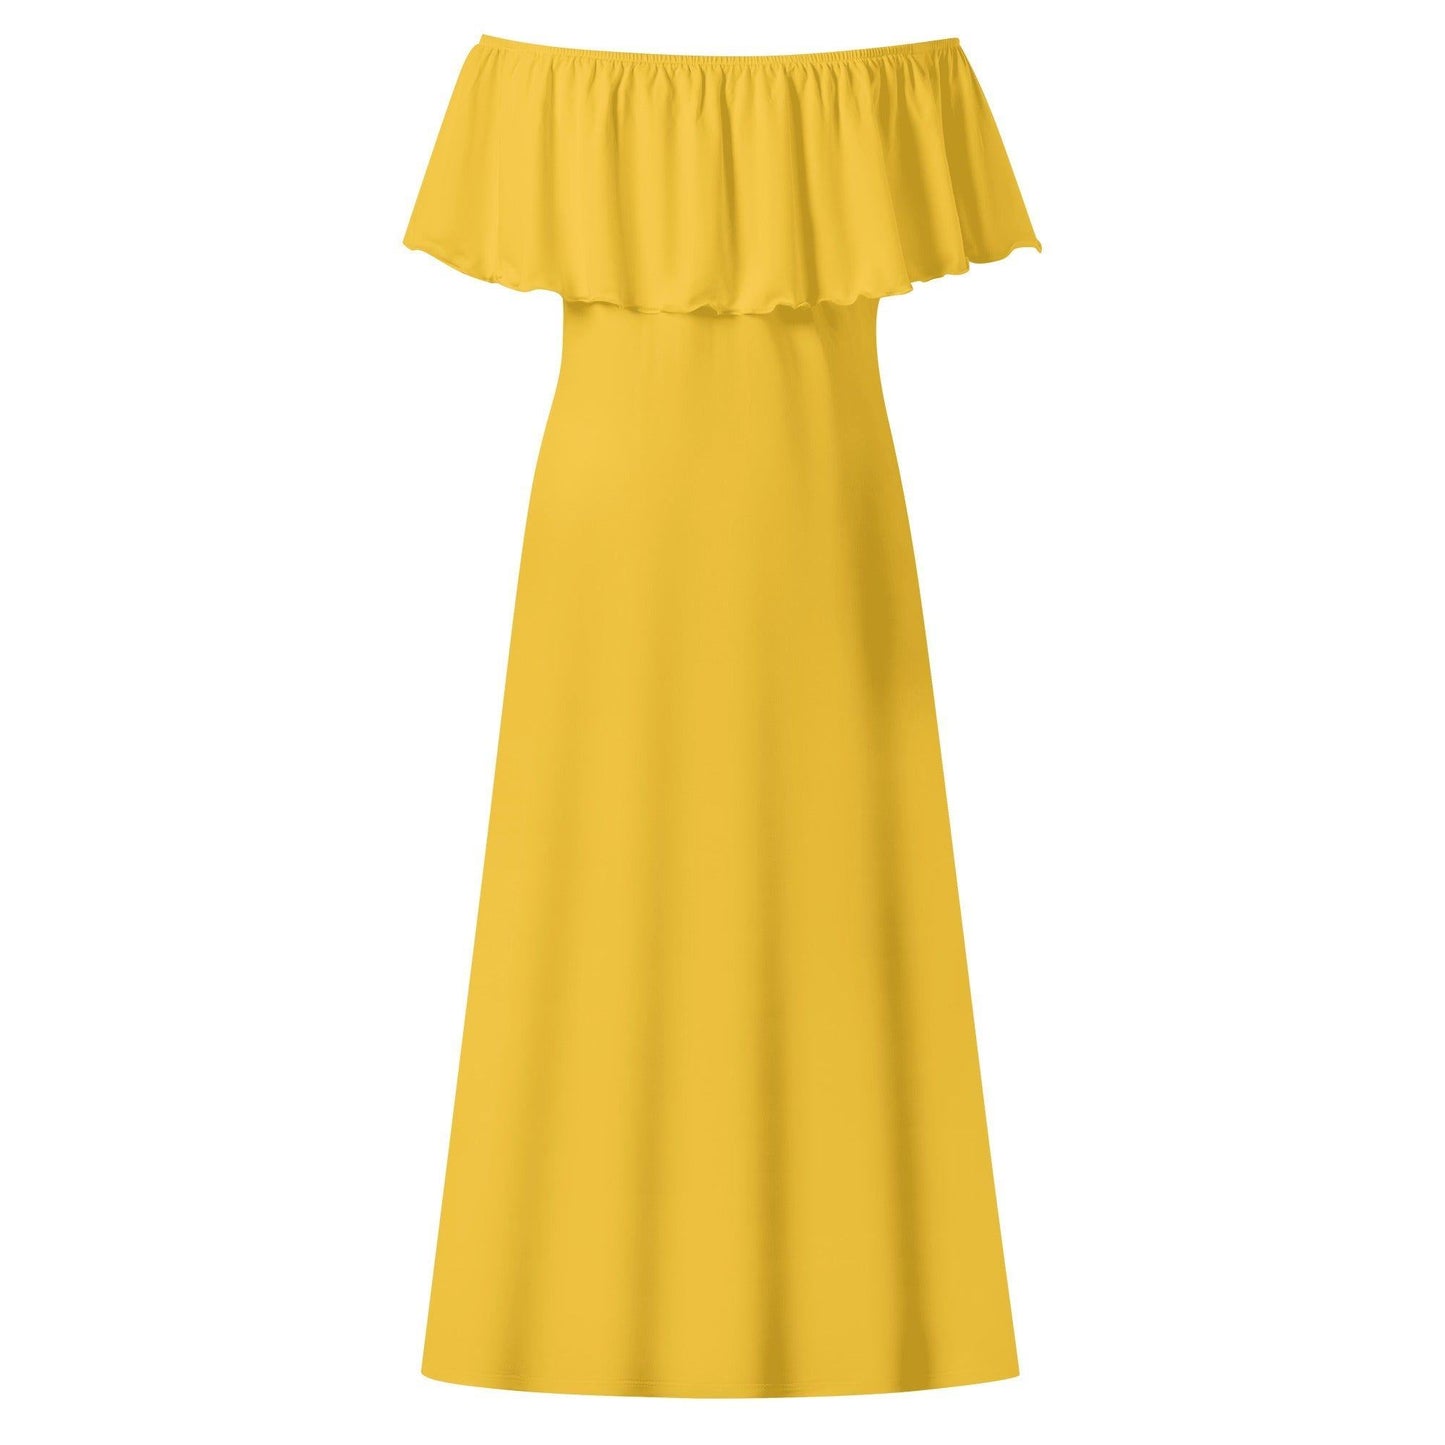 Langes schulterfreies gelbes Kleid mit lockerem Oberteil Off-Shoulder-Kleid 73.99 gelb, Kleid, Lang, locker, Oberteil, Schulterfrei JLR Design